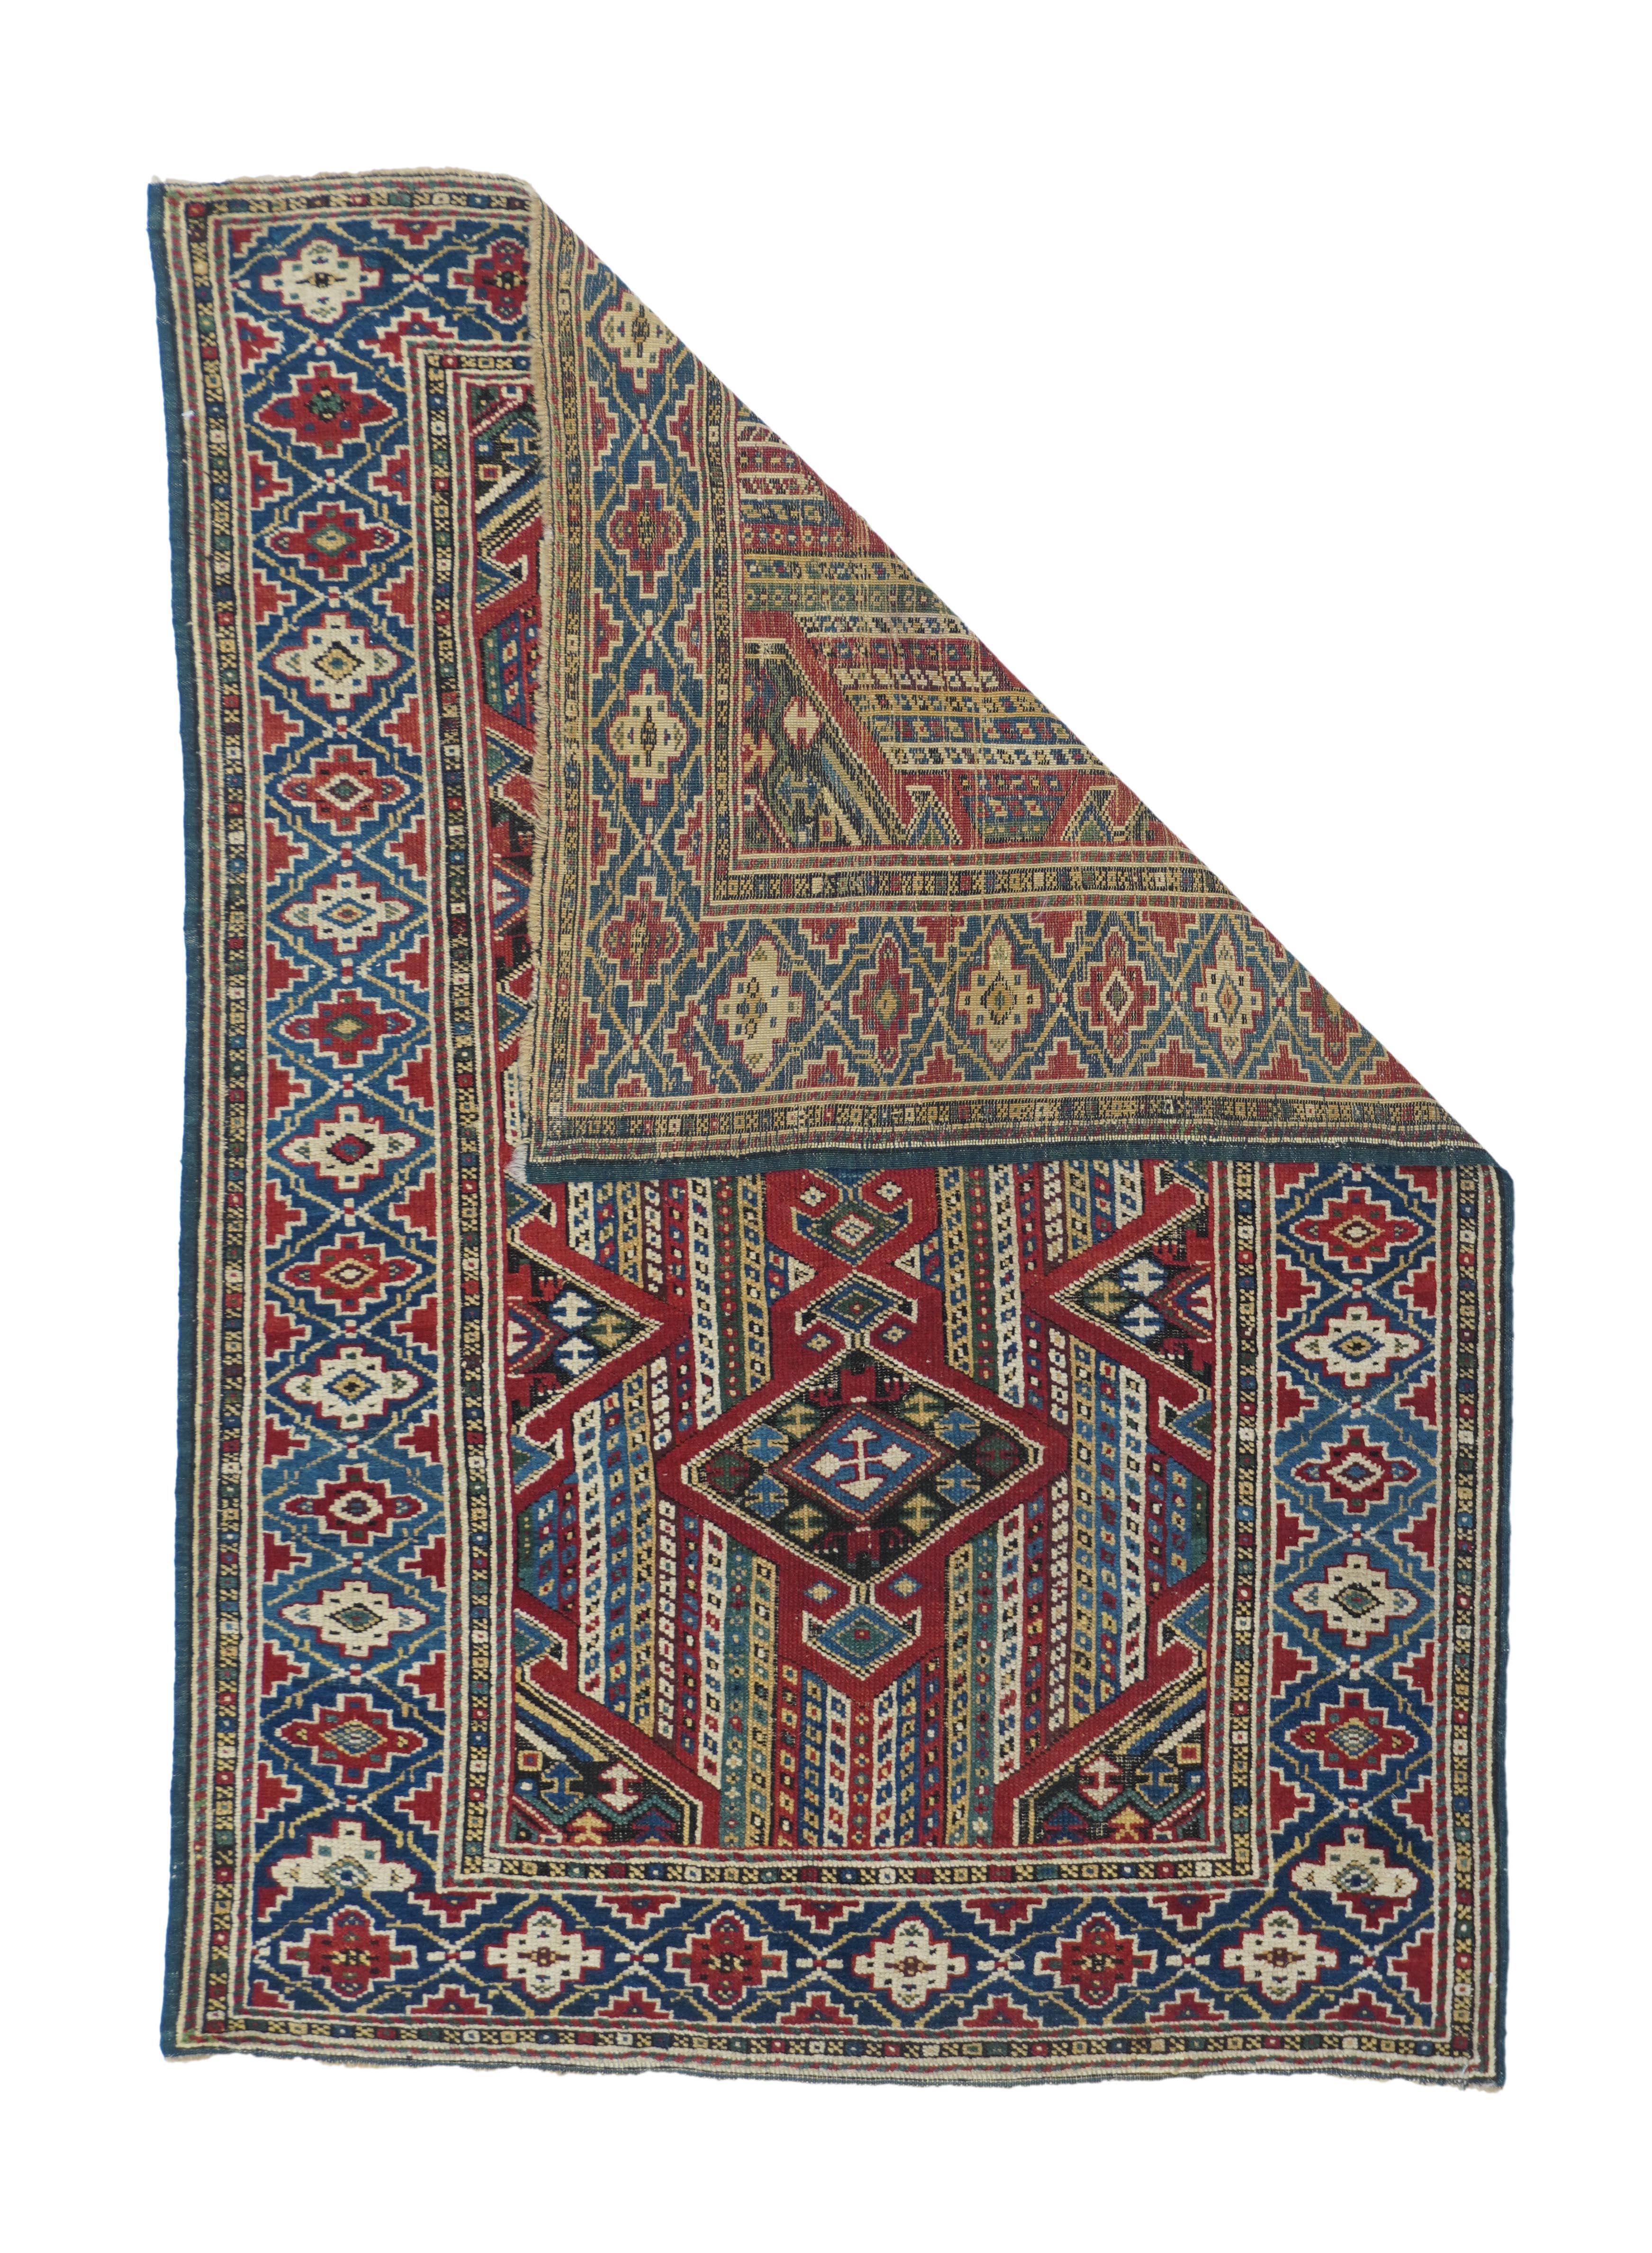 Antique Kuba rug. Measures: 3.3'' x 4.6''.